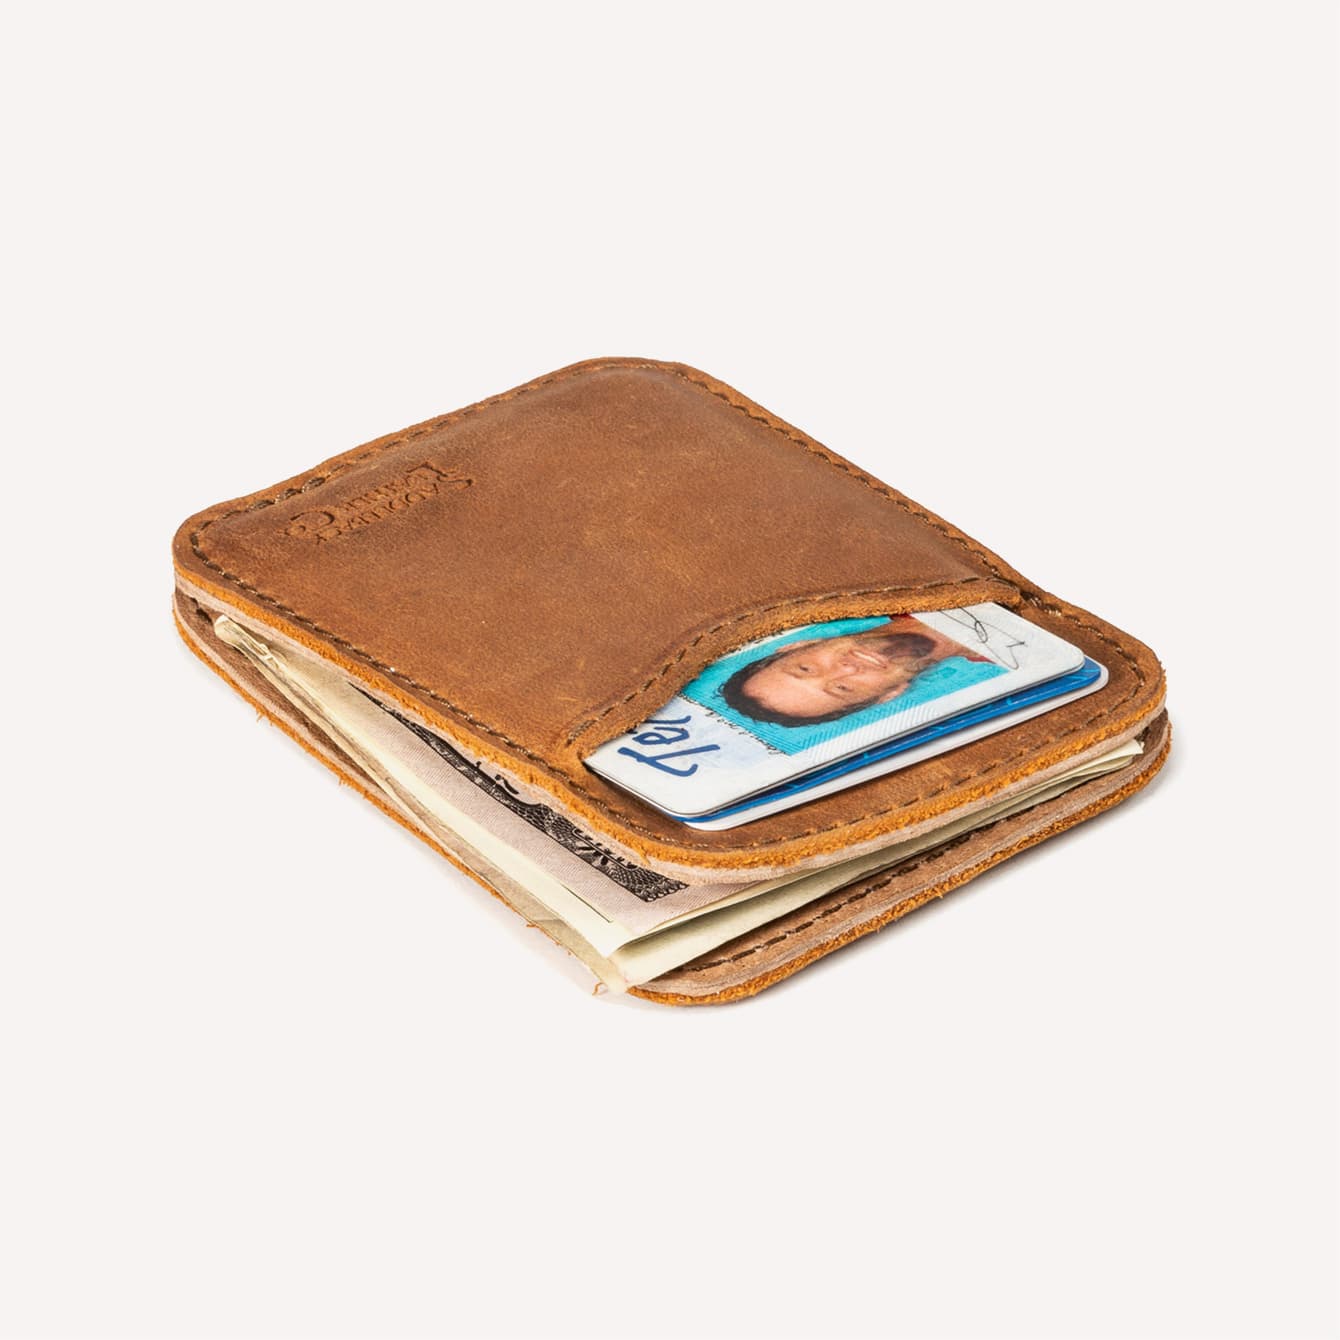 Minimalist Slim Leather Wallet Magnetic Bill Clip Pull Tab 